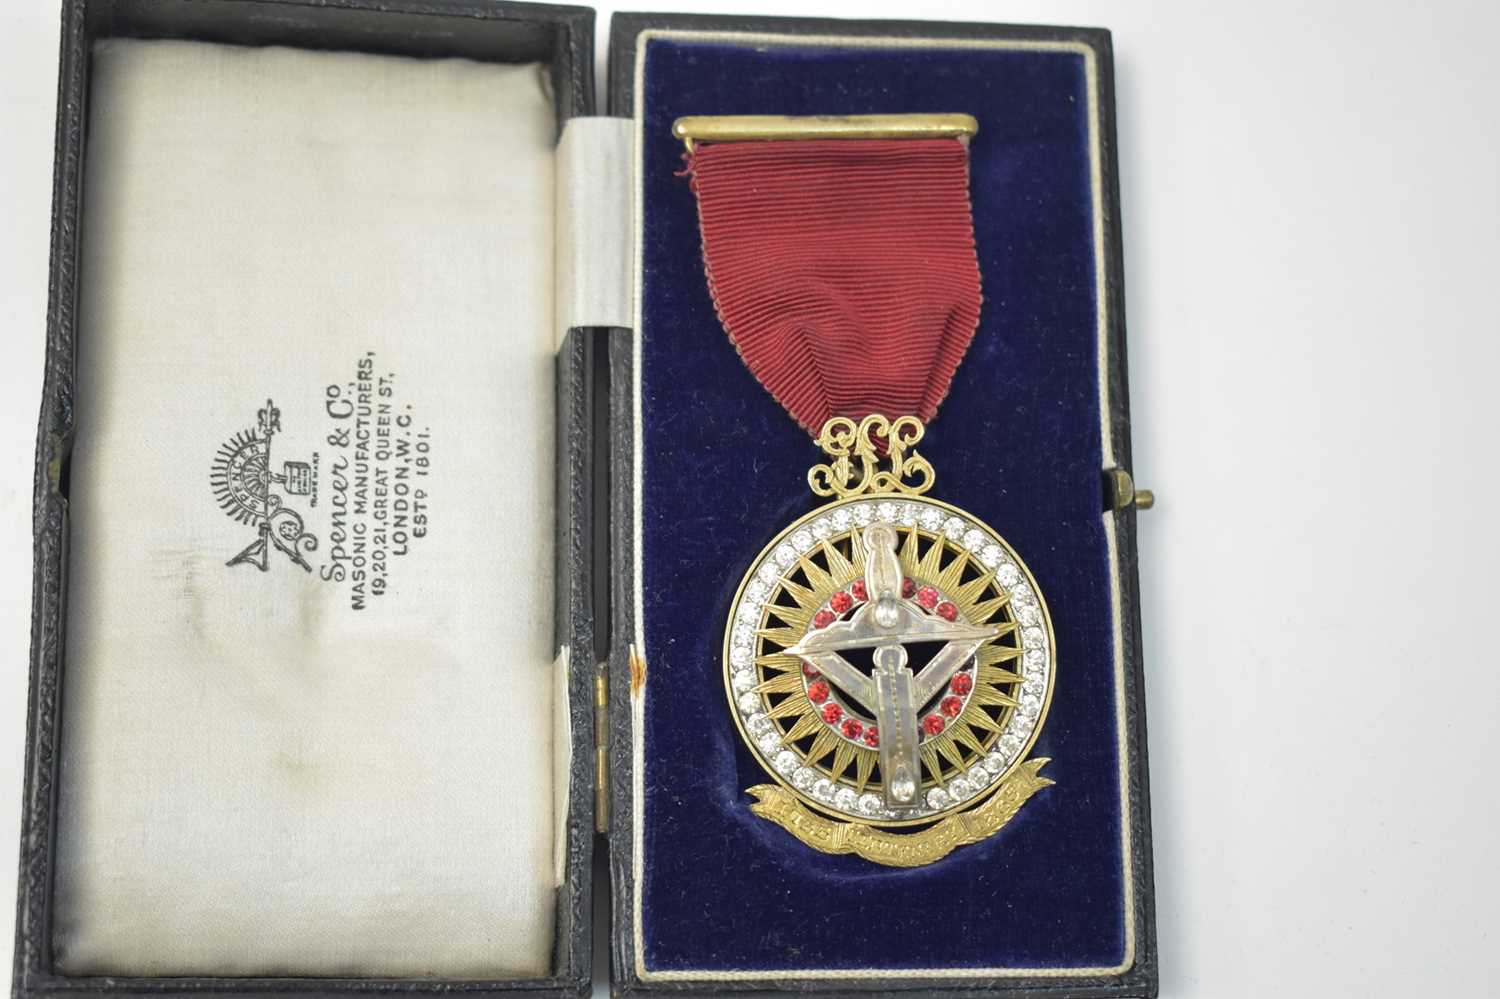 363 - Masonic medal